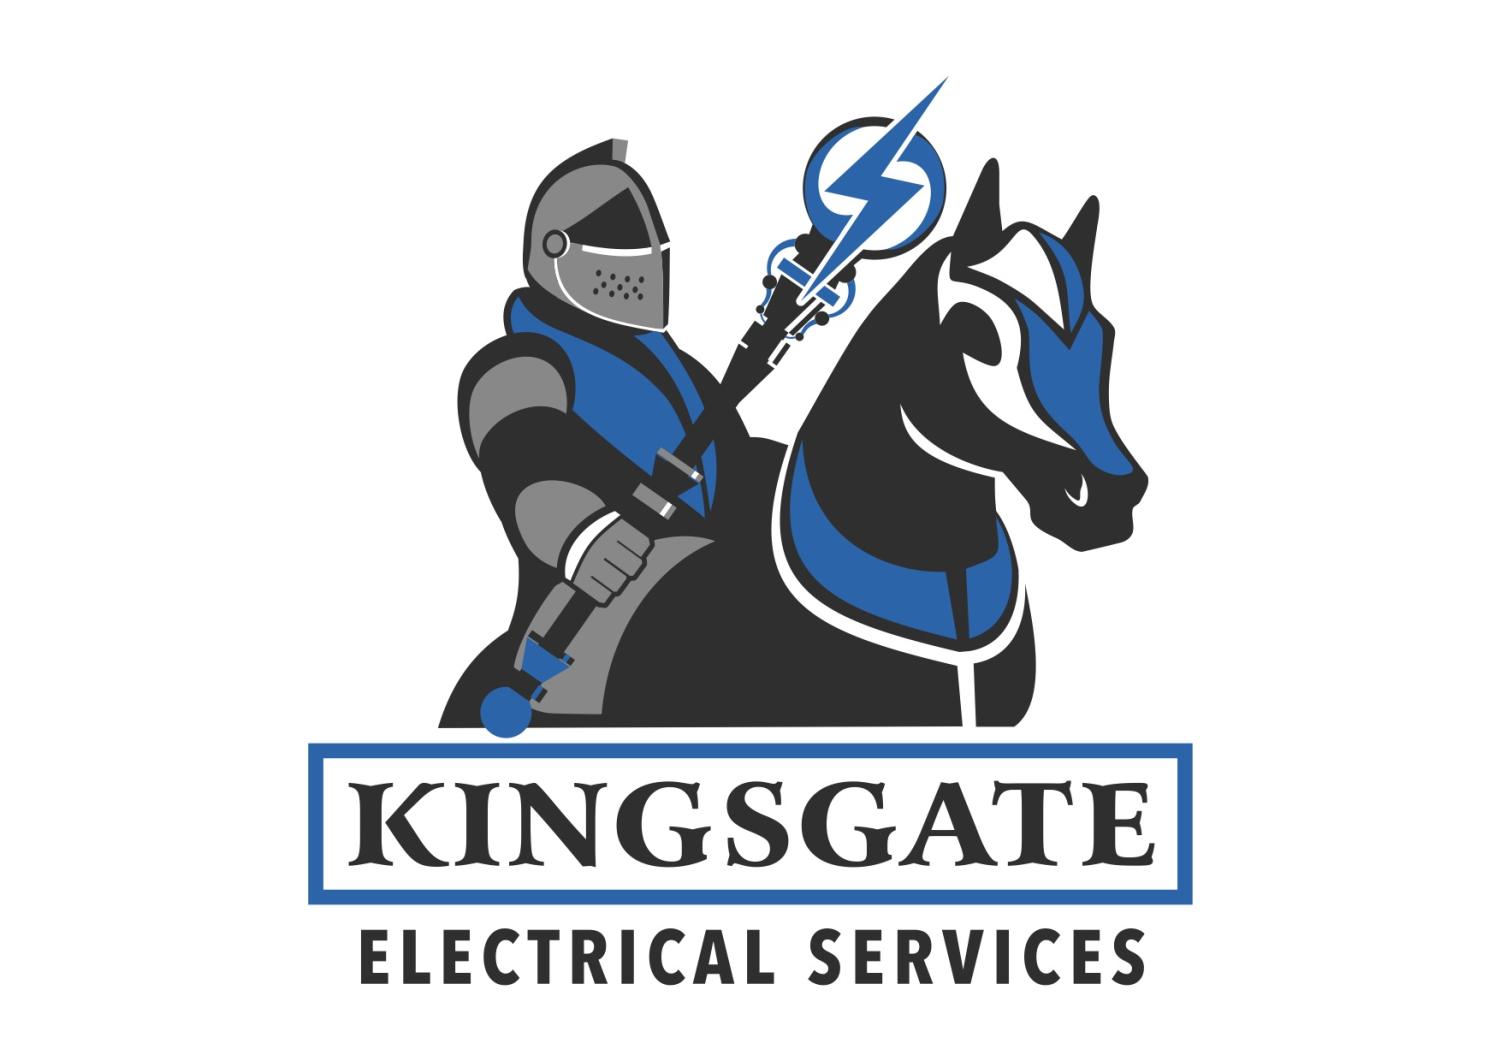 Kingsgate Electrical Services - LOGO